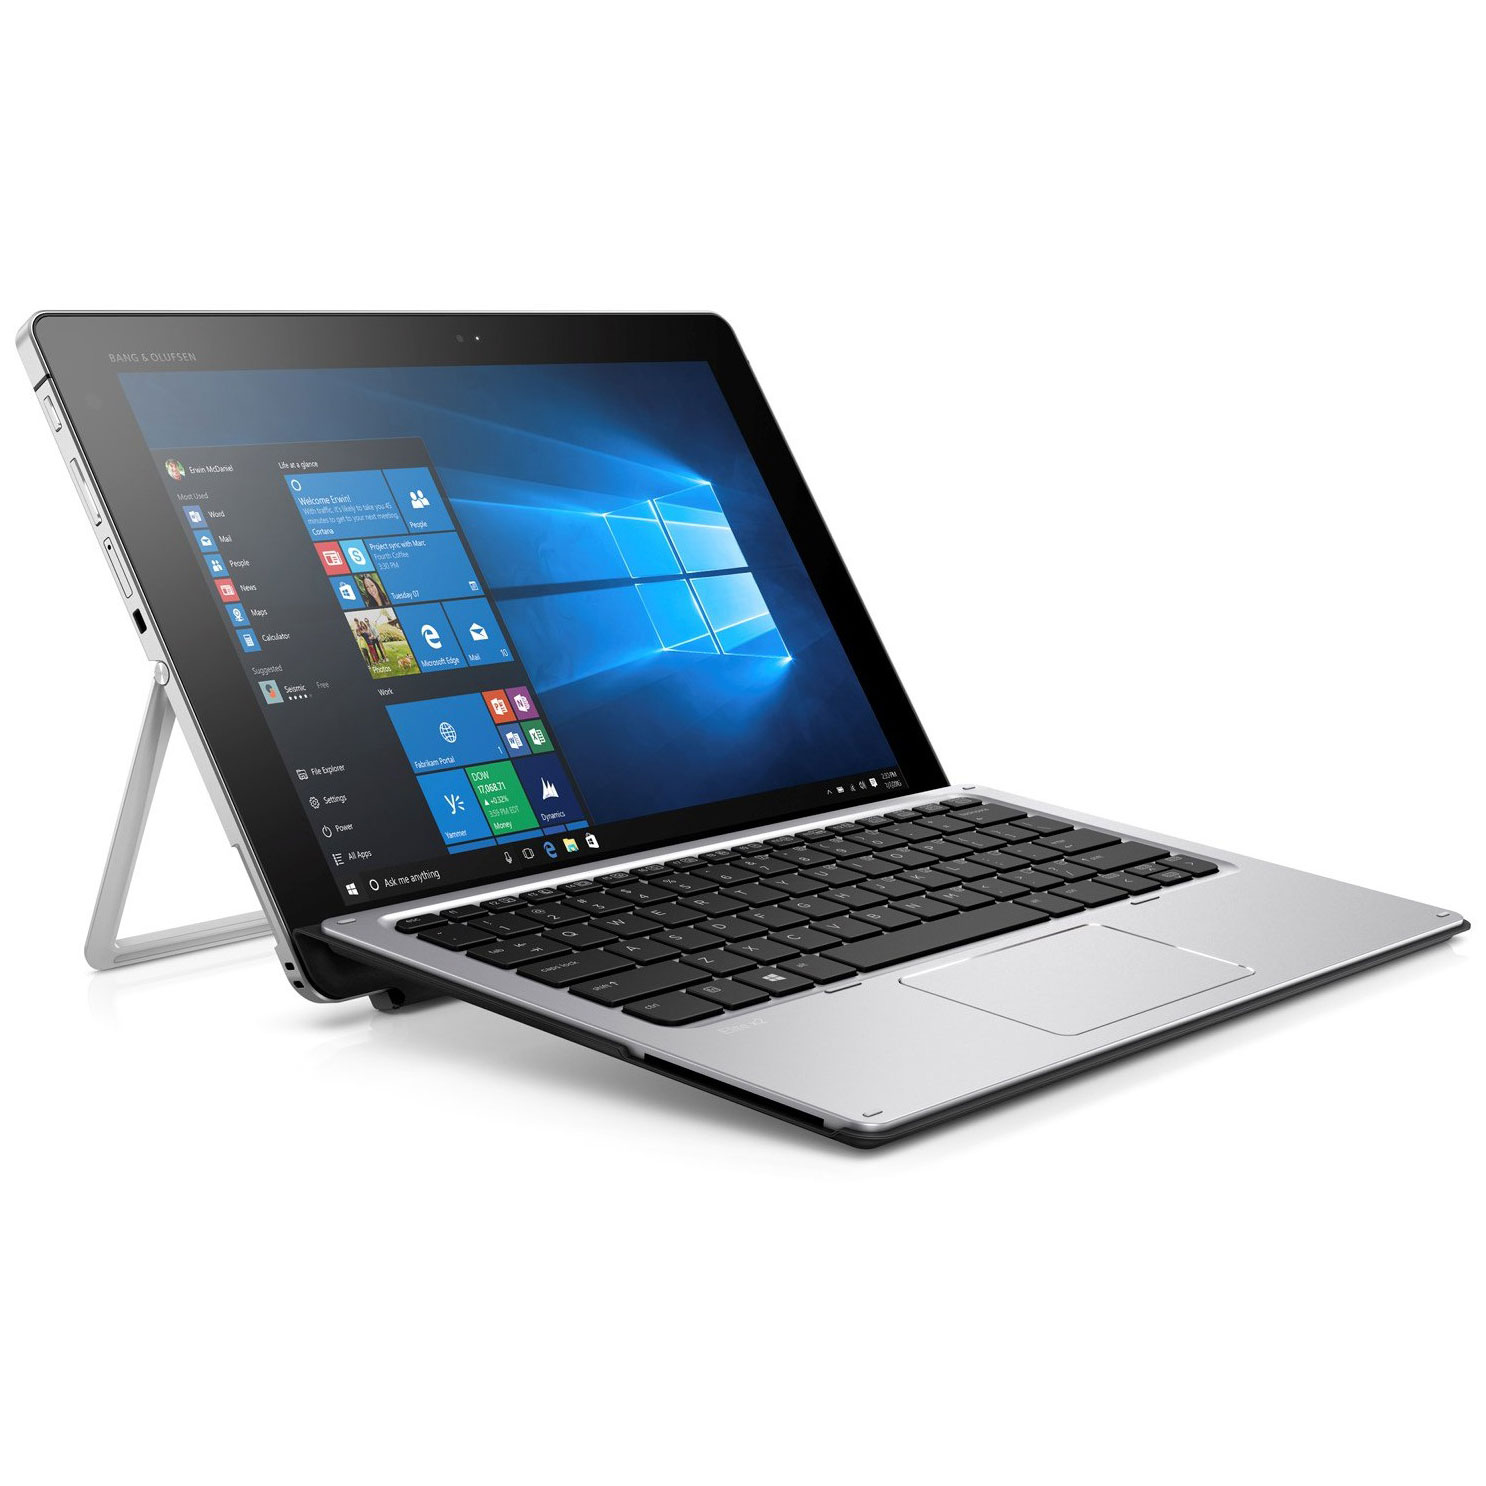  *NEW* Tablet HP Elite x2 1012 G1  m5-6Y54/4GB/128GB SSD/Windows 10 Pro 